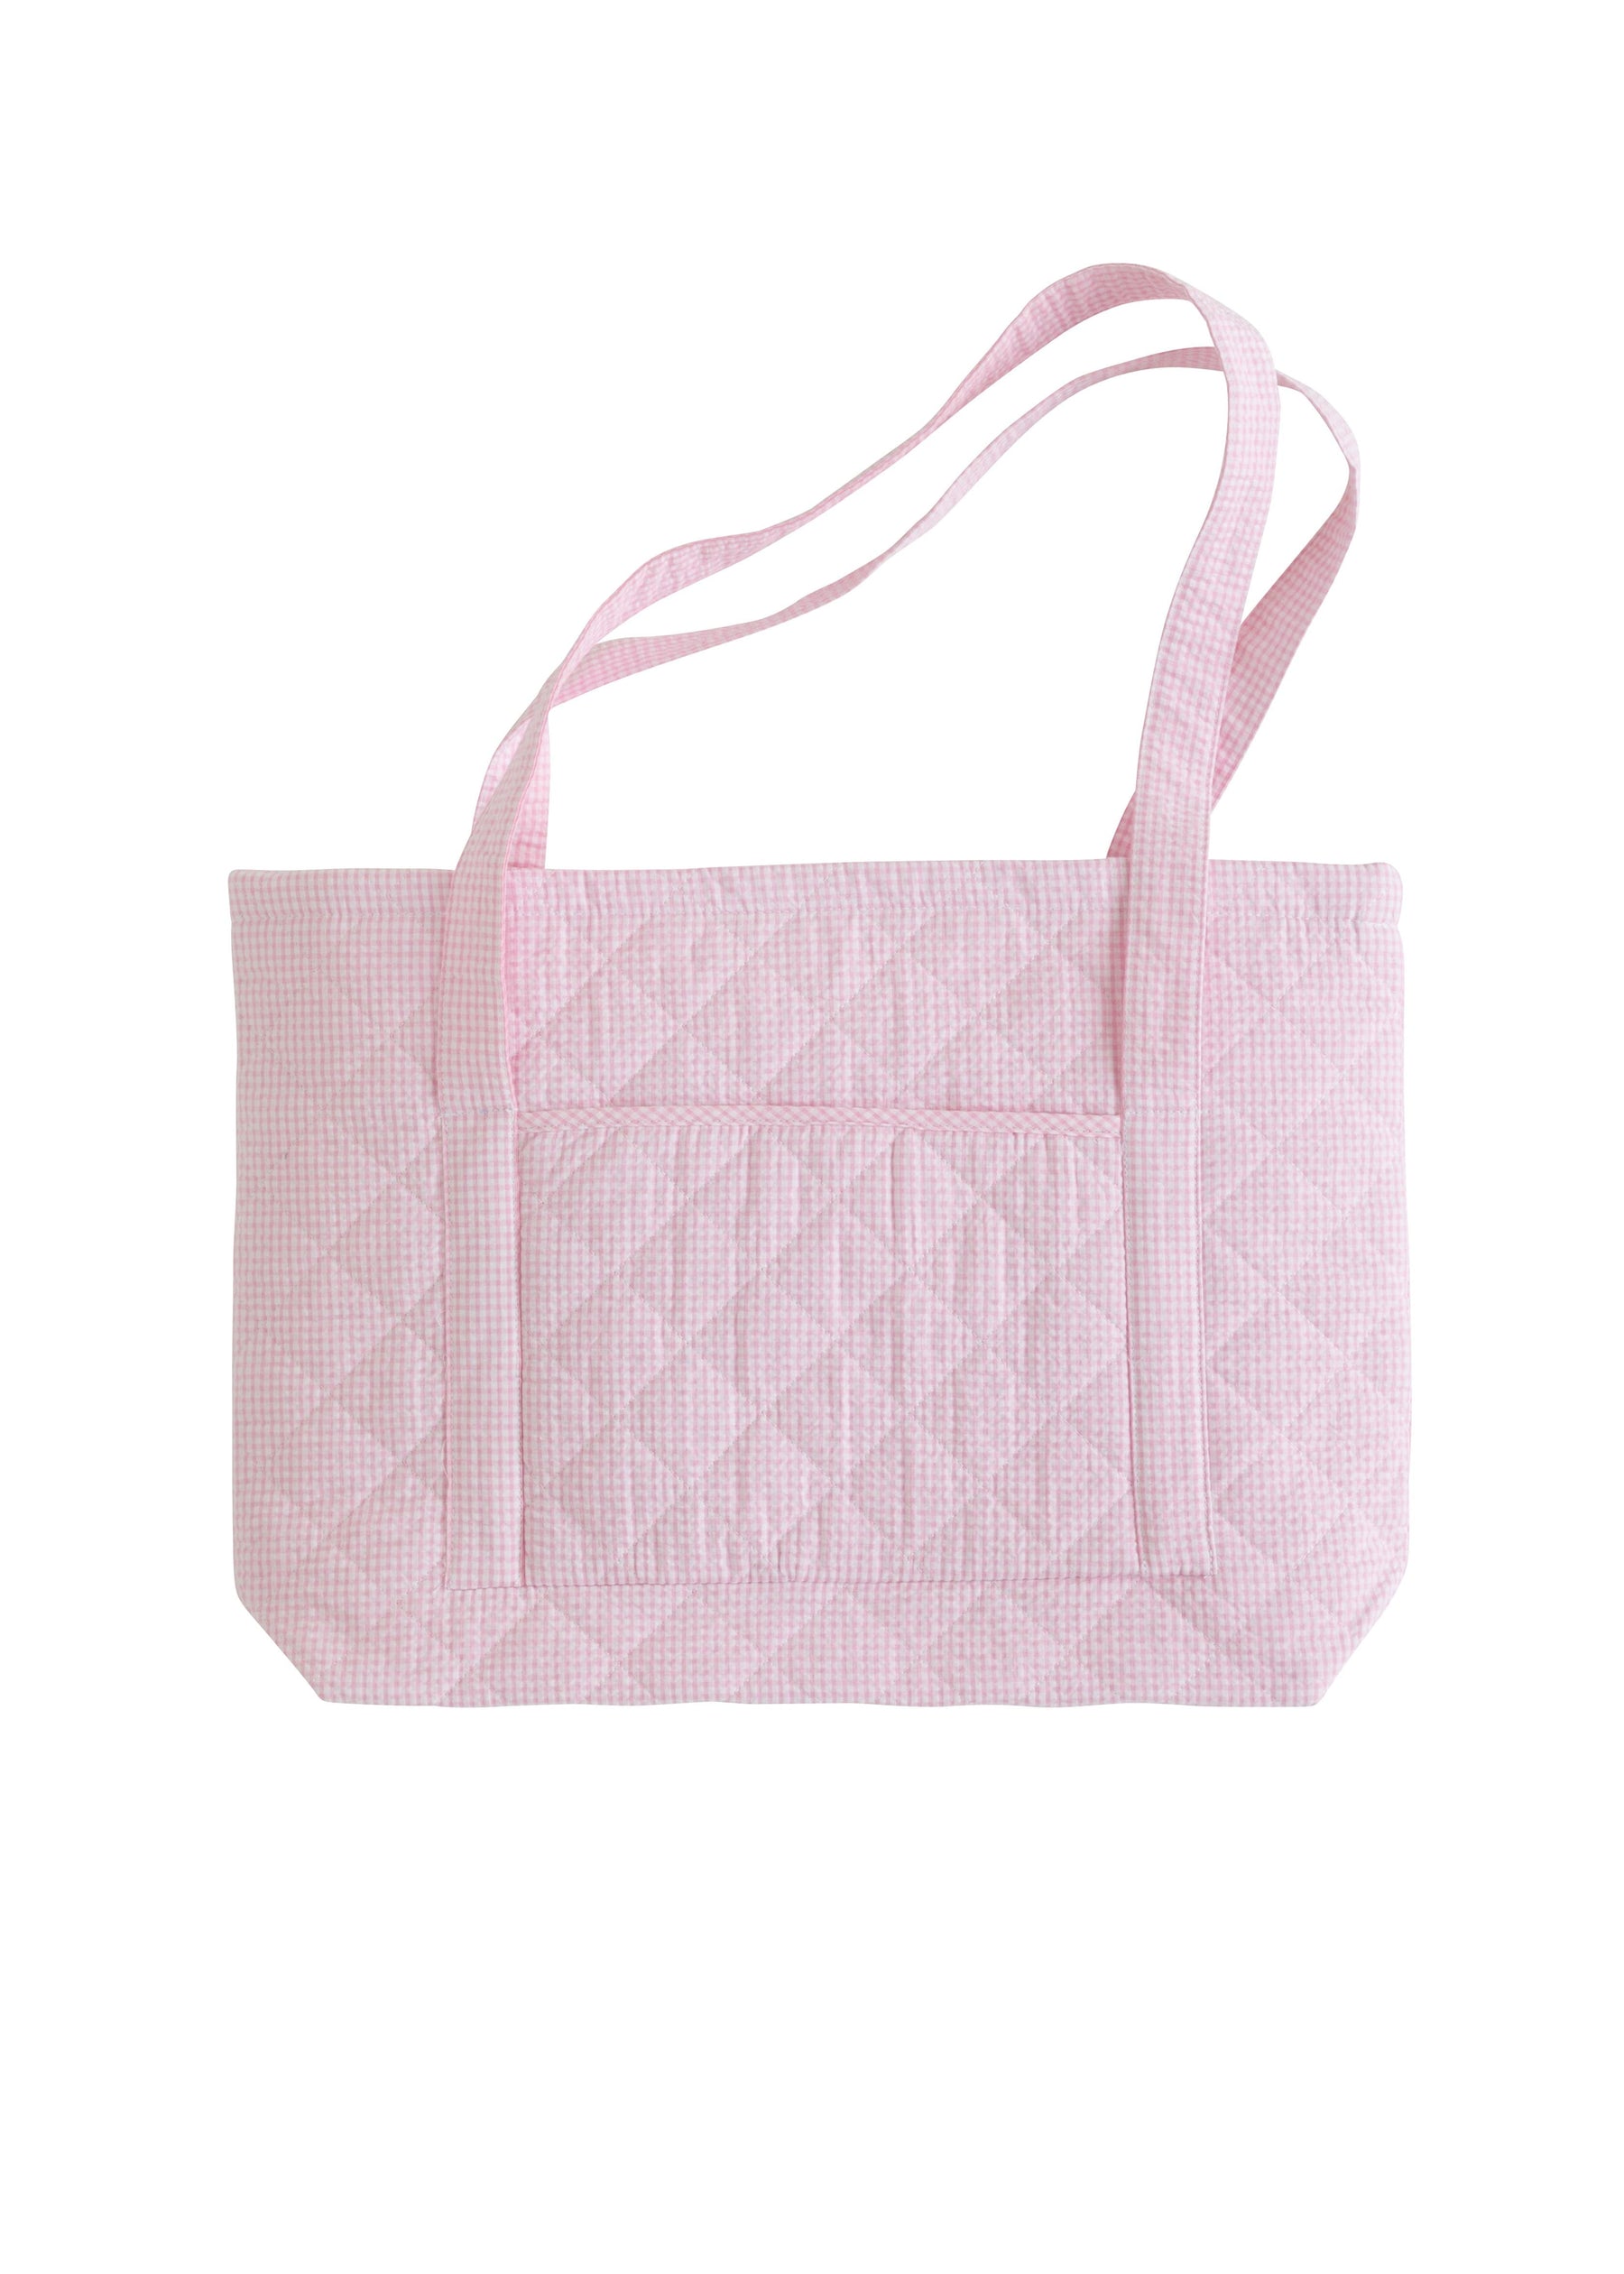 seguridadindustrialcr classic children's luggage light pink tote bag